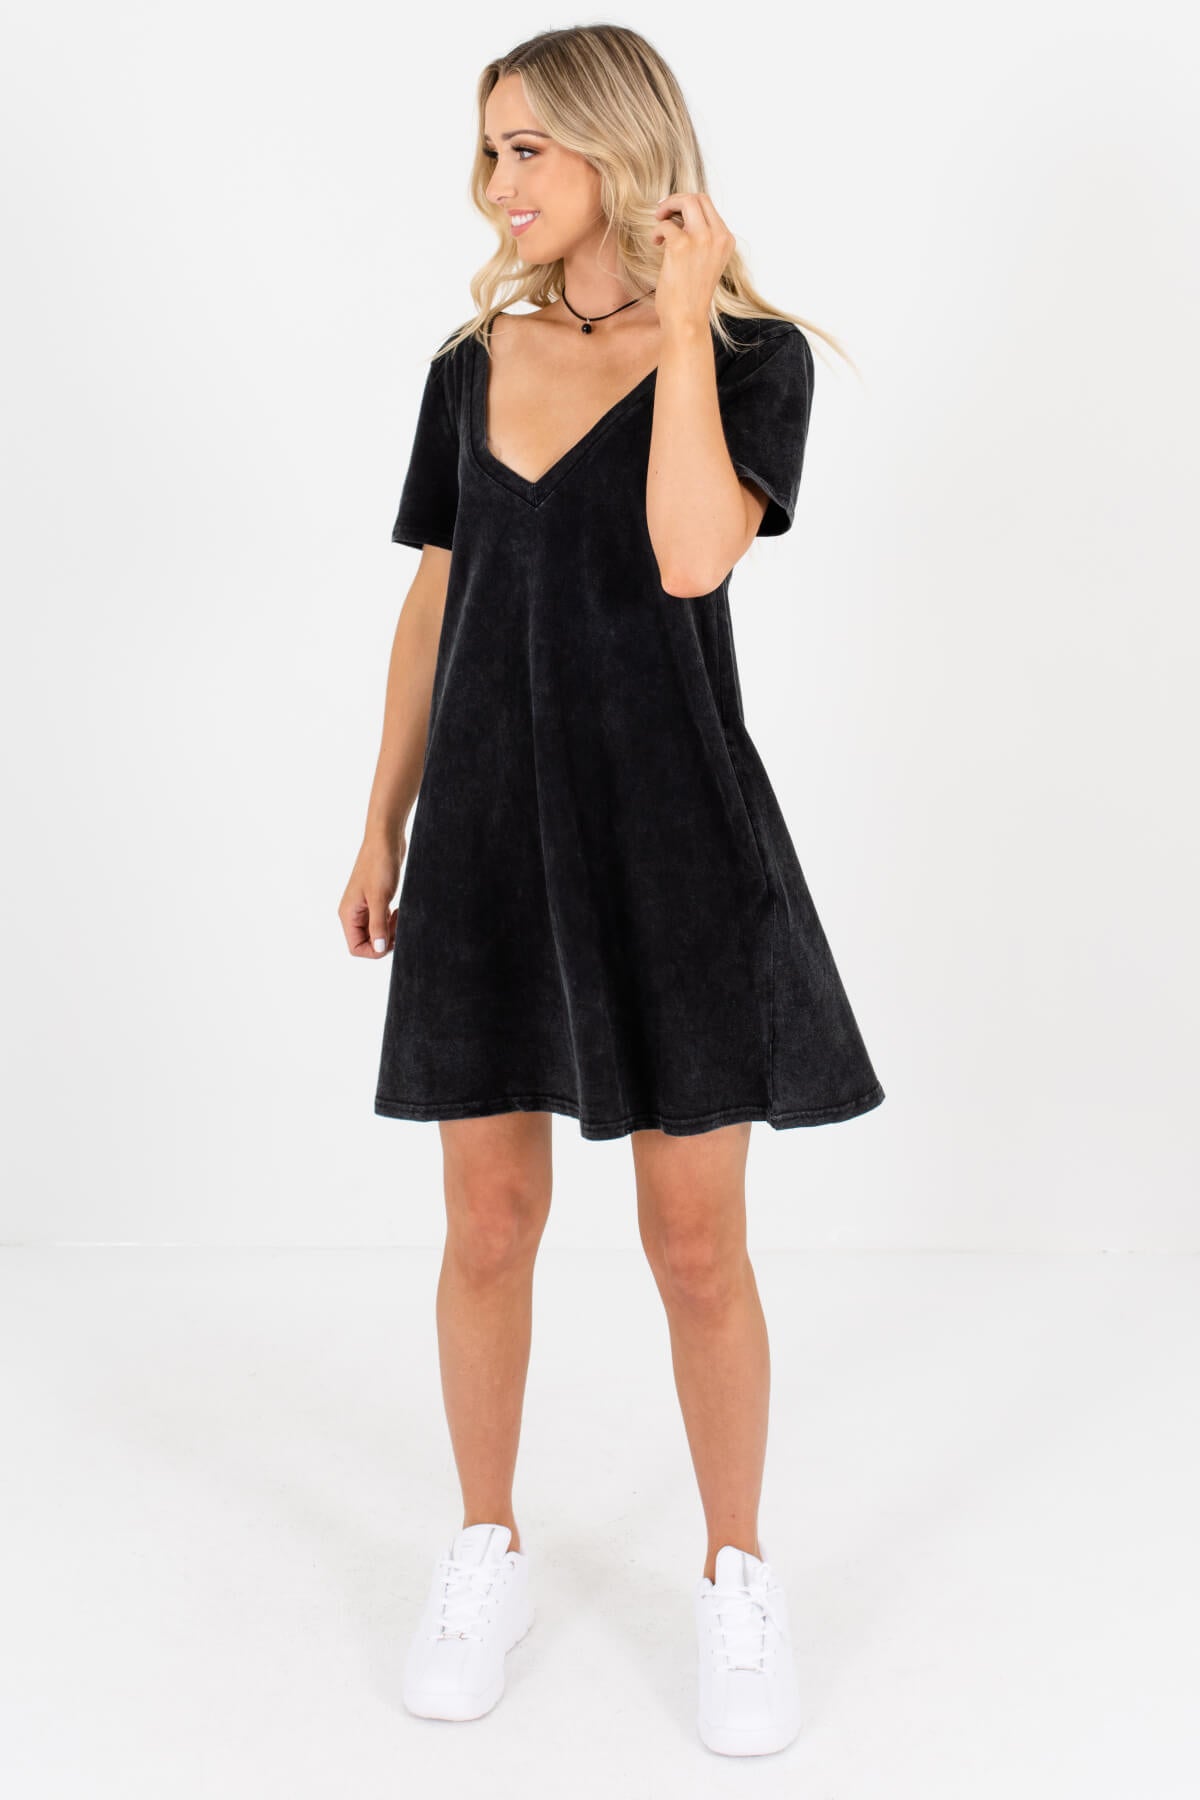 Black High-Quality Boutique Mini Dresses for Women